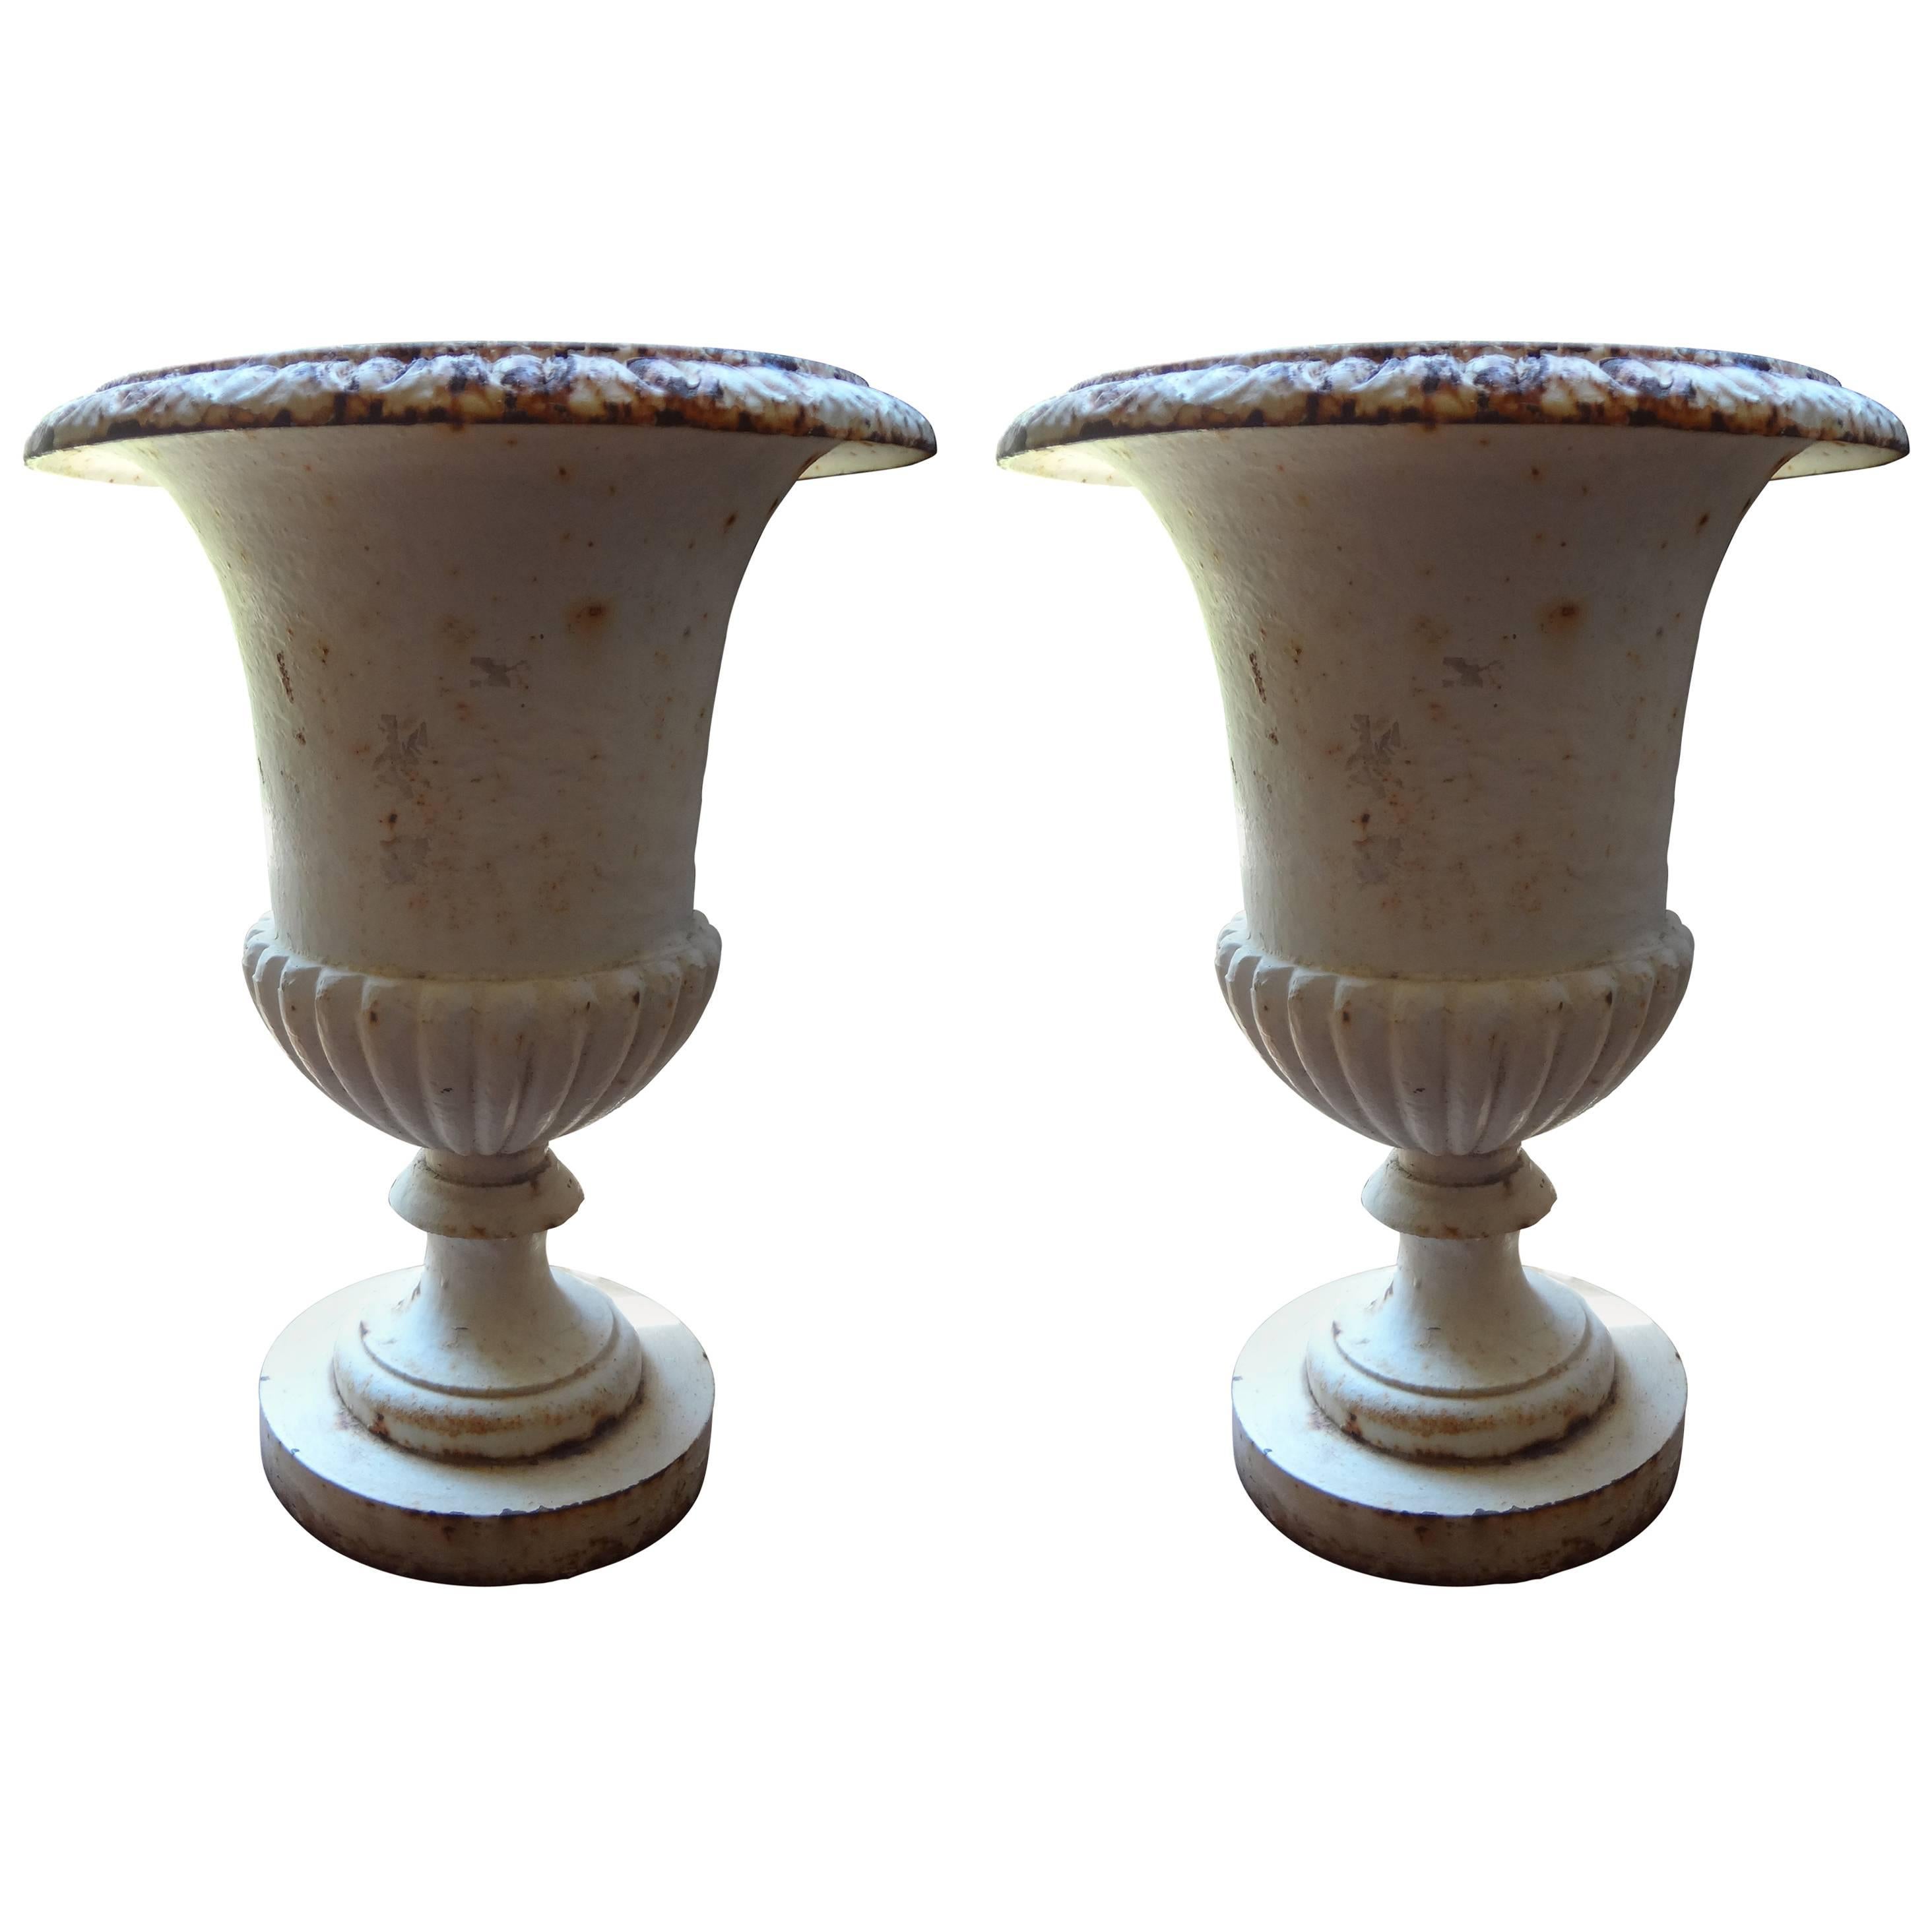 Pair of French Campana Style Iron Garden Urns, circa 1920